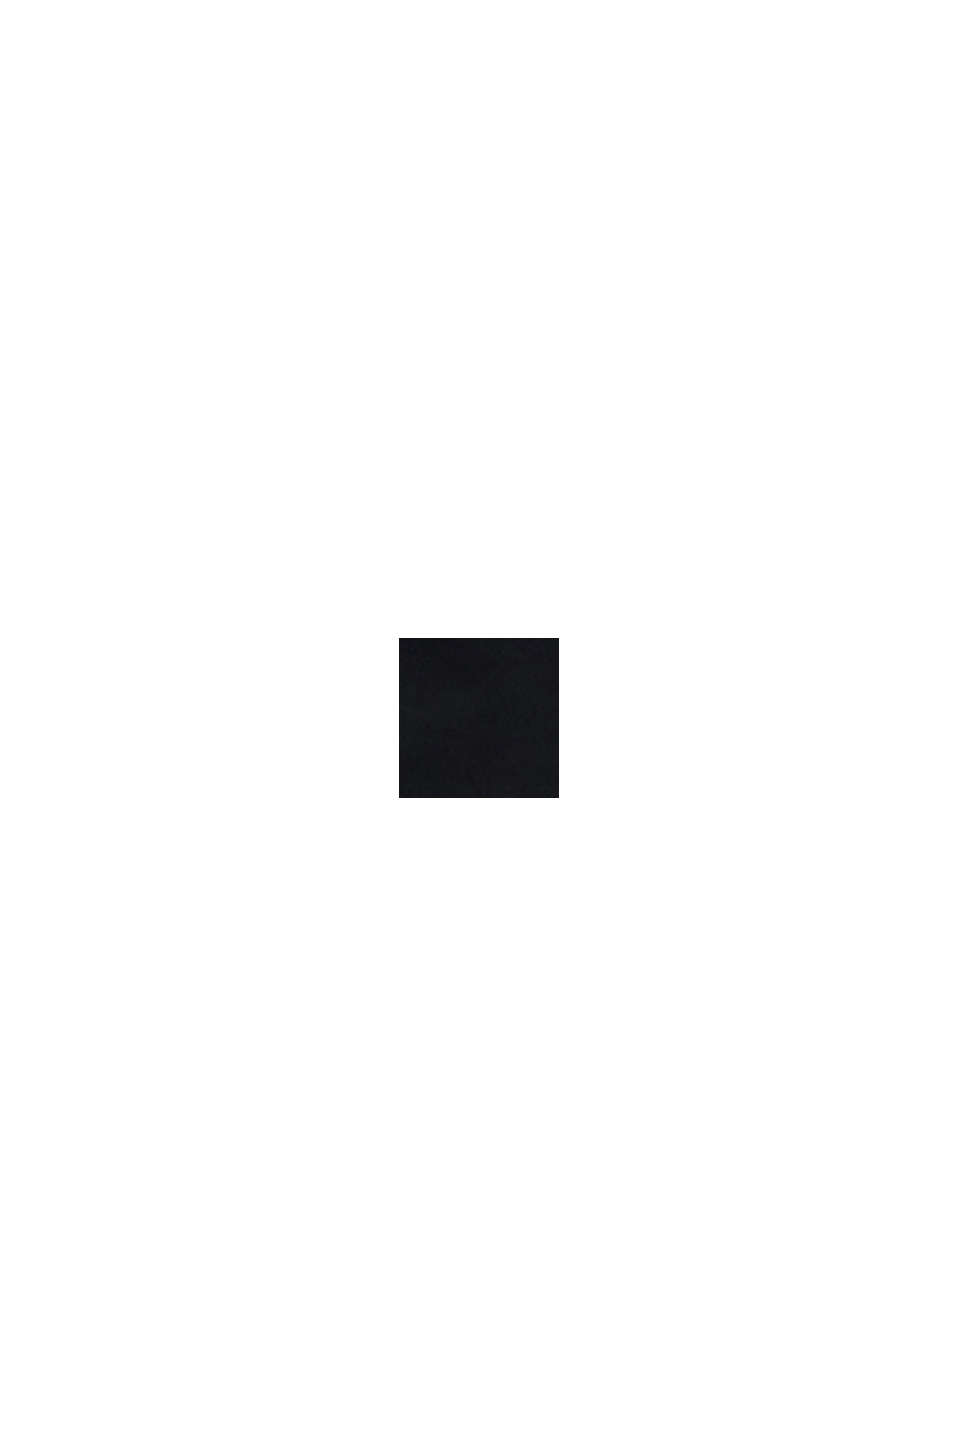 ESPRIT x Rest & Recreation Capsule 短版 T 恤, BLACK, swatch